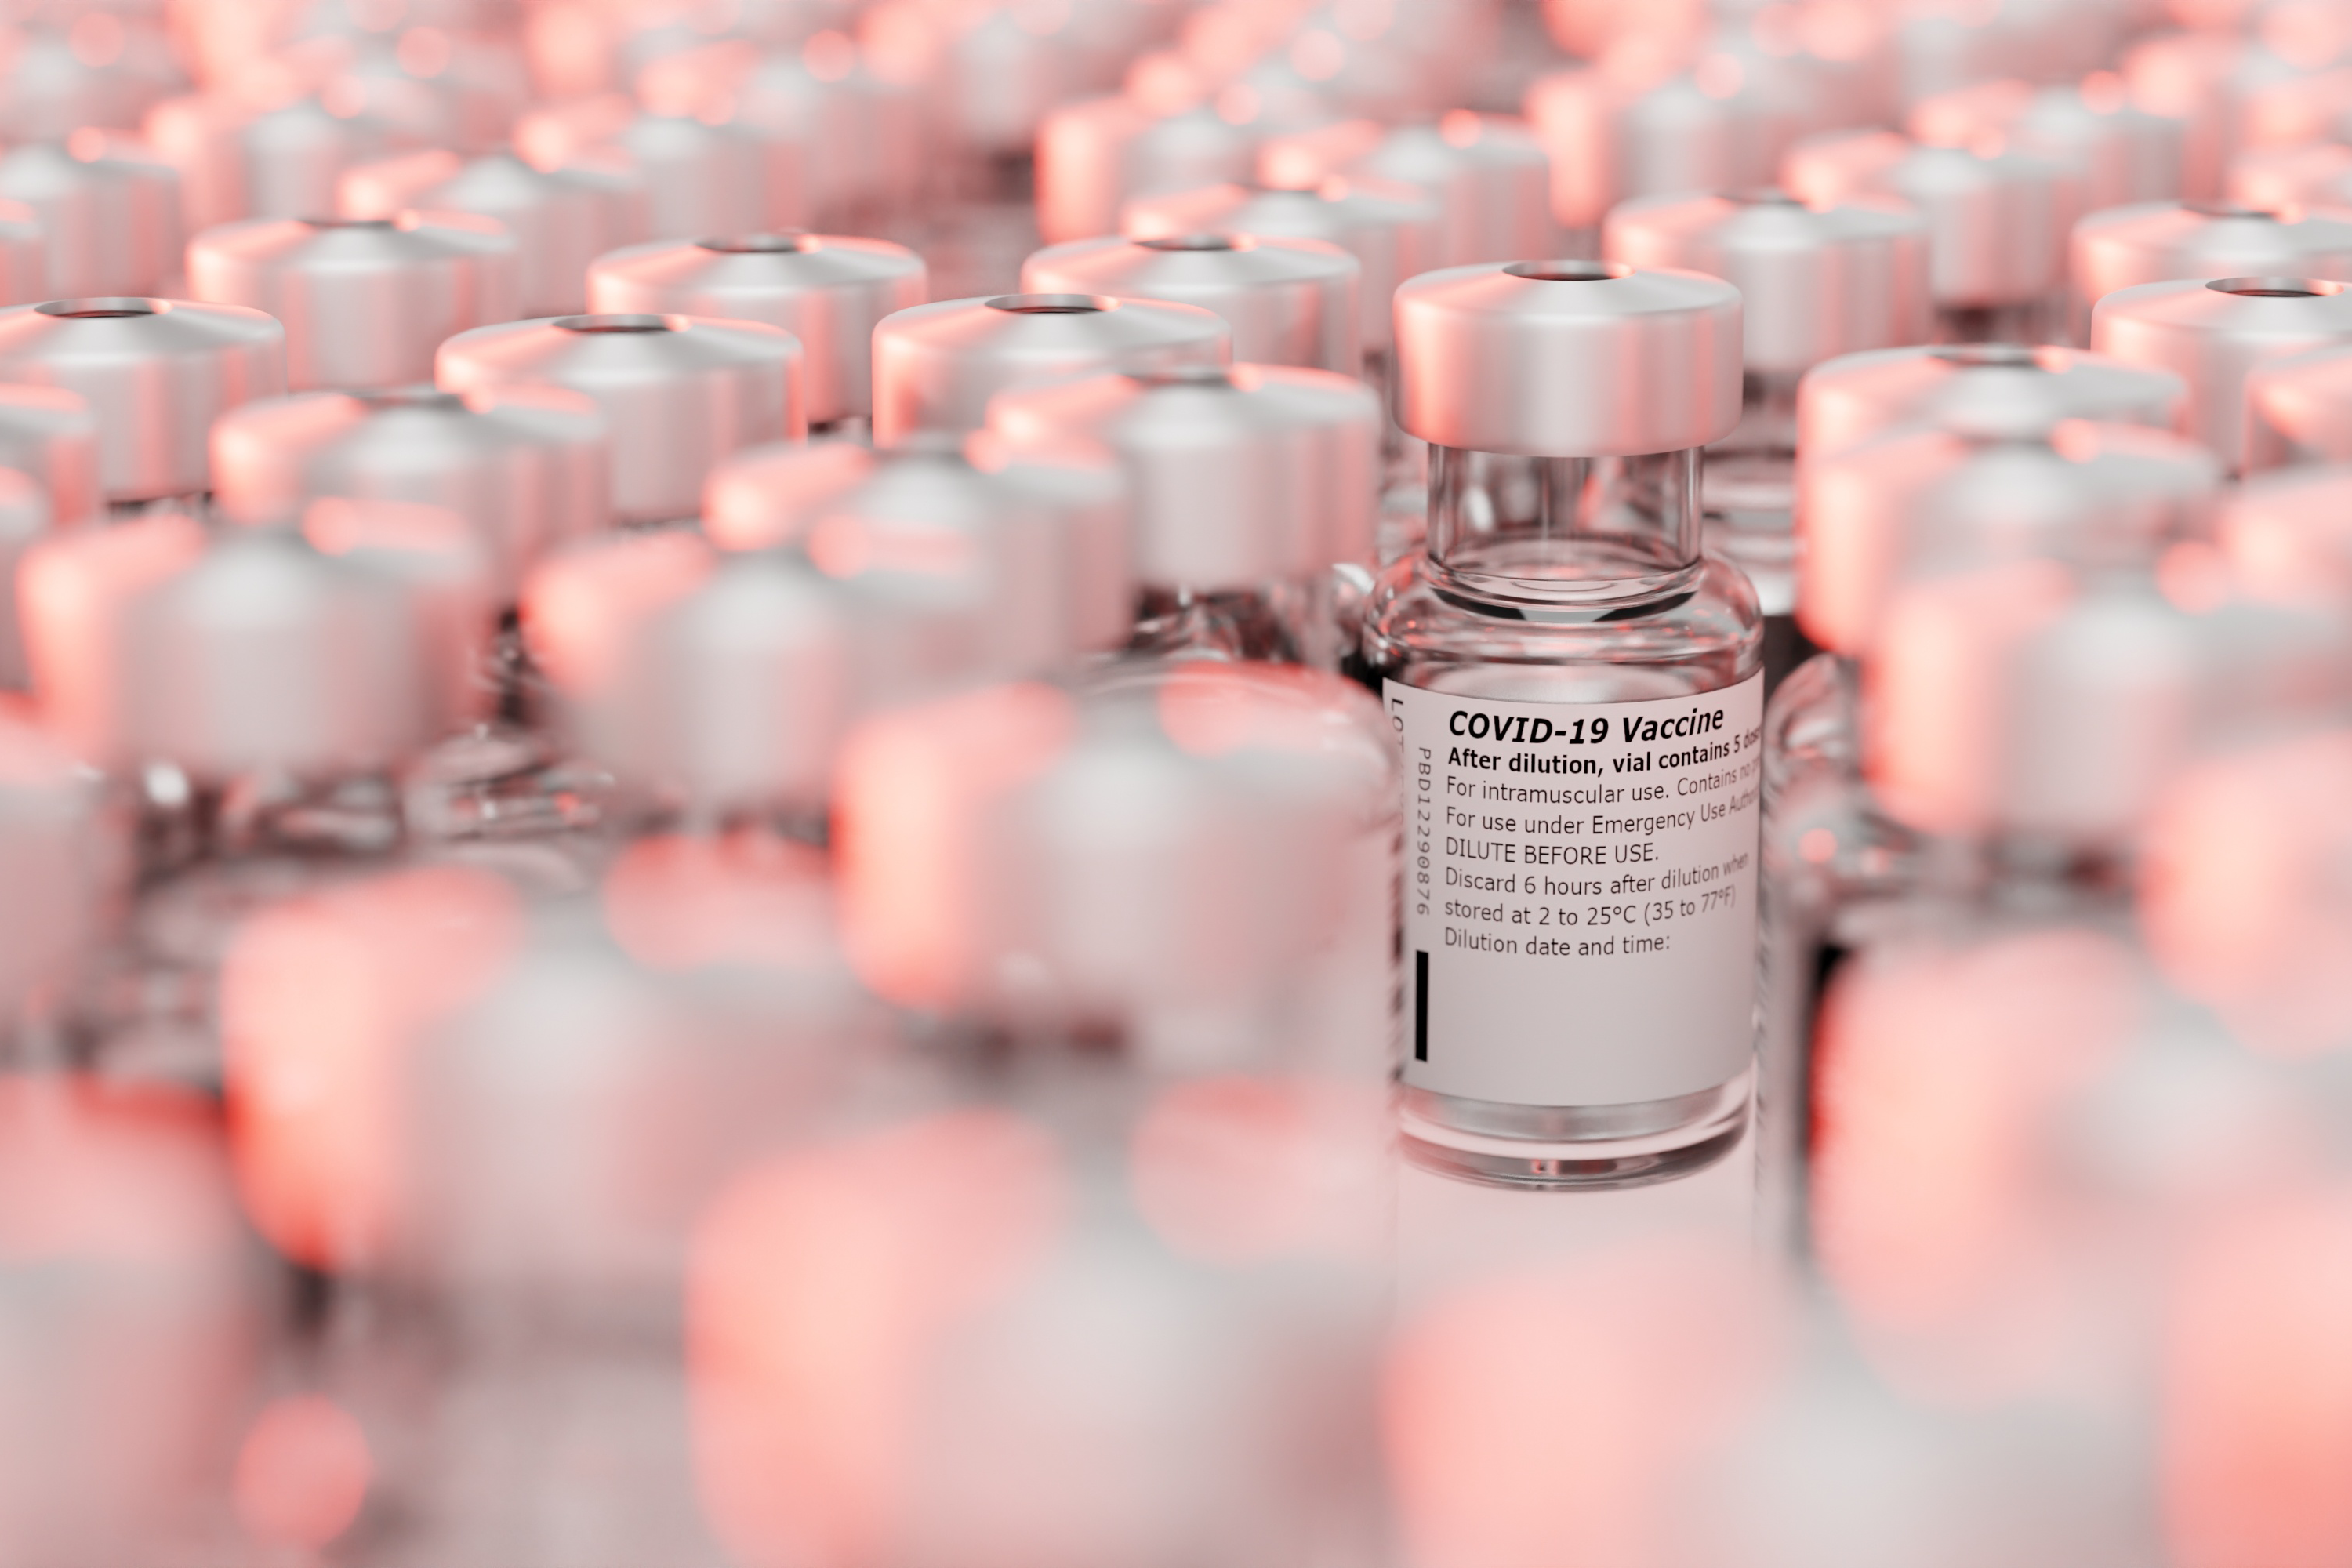 Image: Tray full of Vaccine Vials.